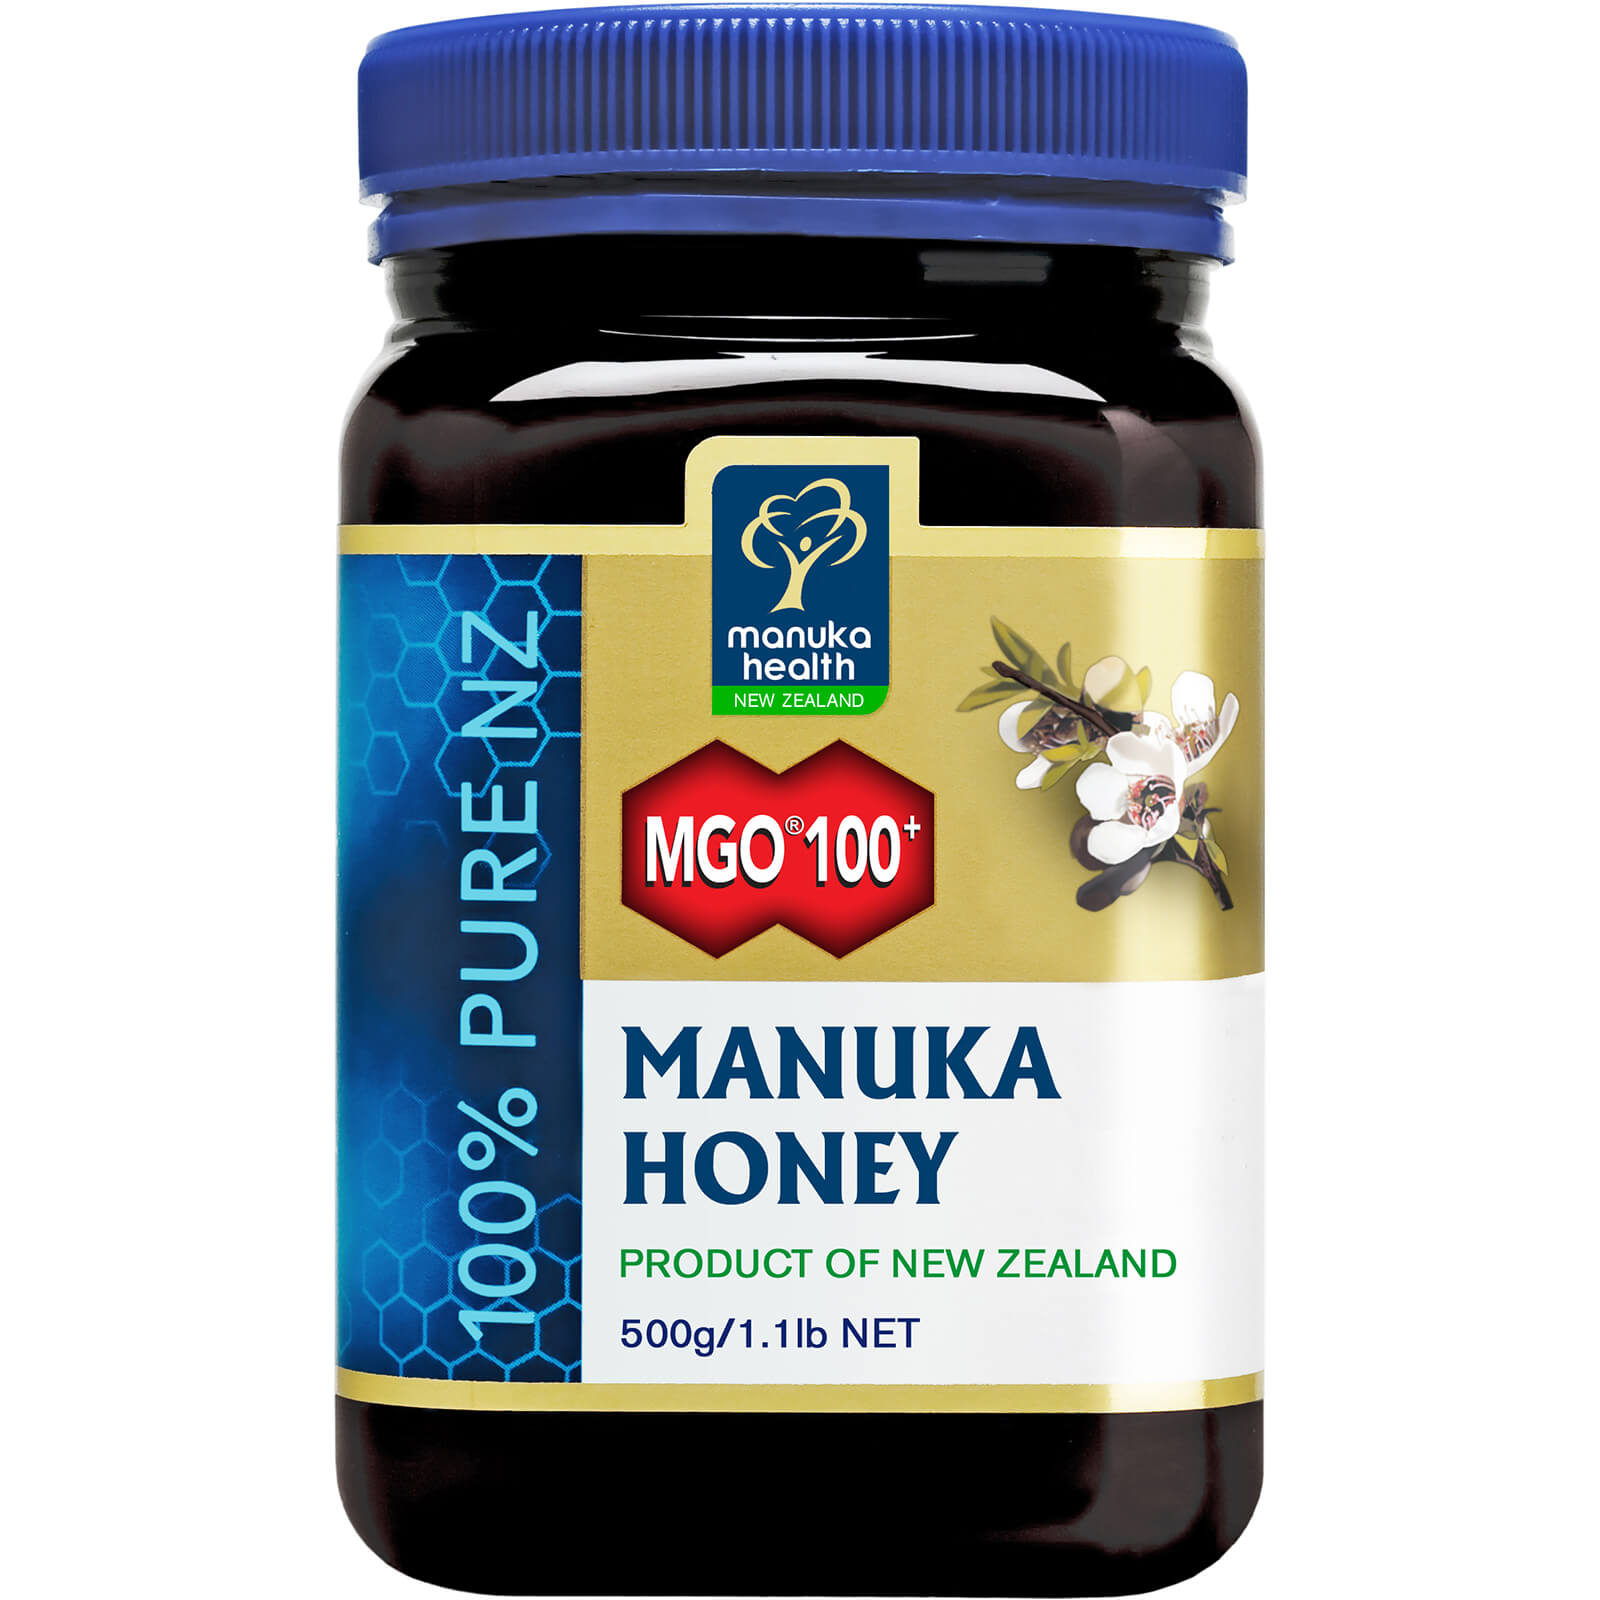 Photos - Cream / Lotion MGO 100+ Pure Manuka Honey Blend - 500g MAN004